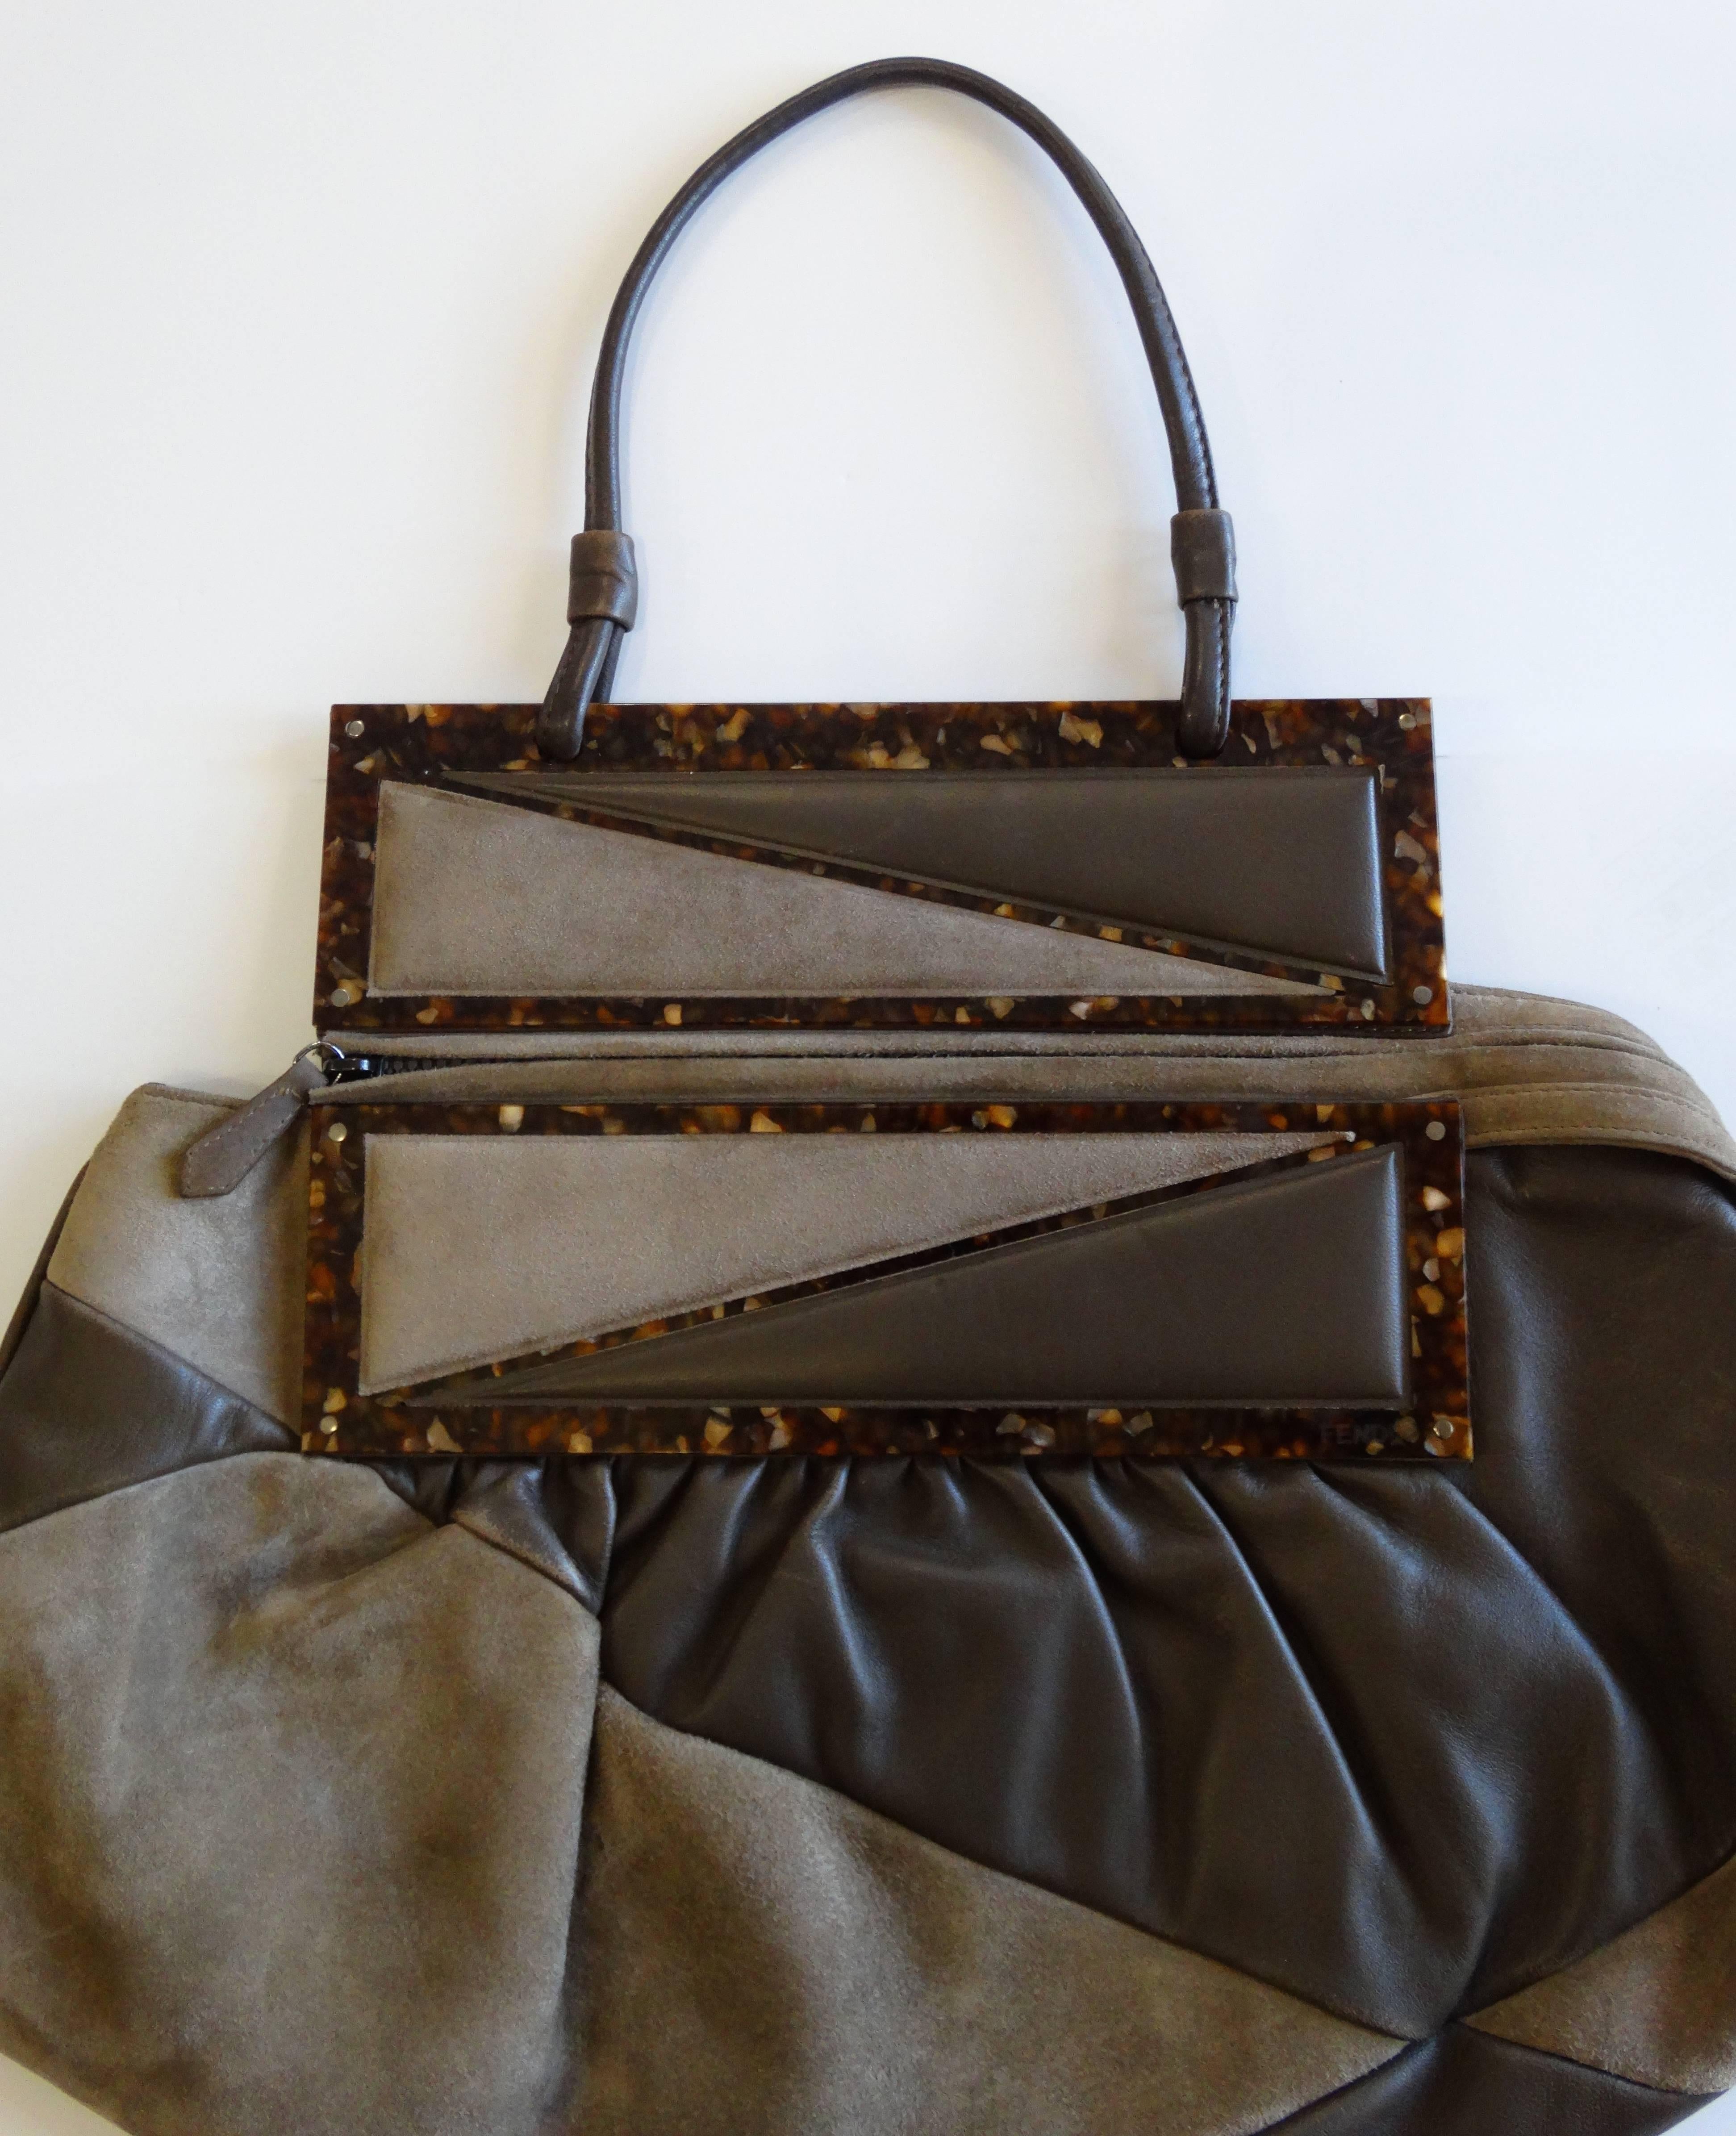 Fendi Borsa Pochette To You Hobo Bag In Excellent Condition For Sale In Scottsdale, AZ